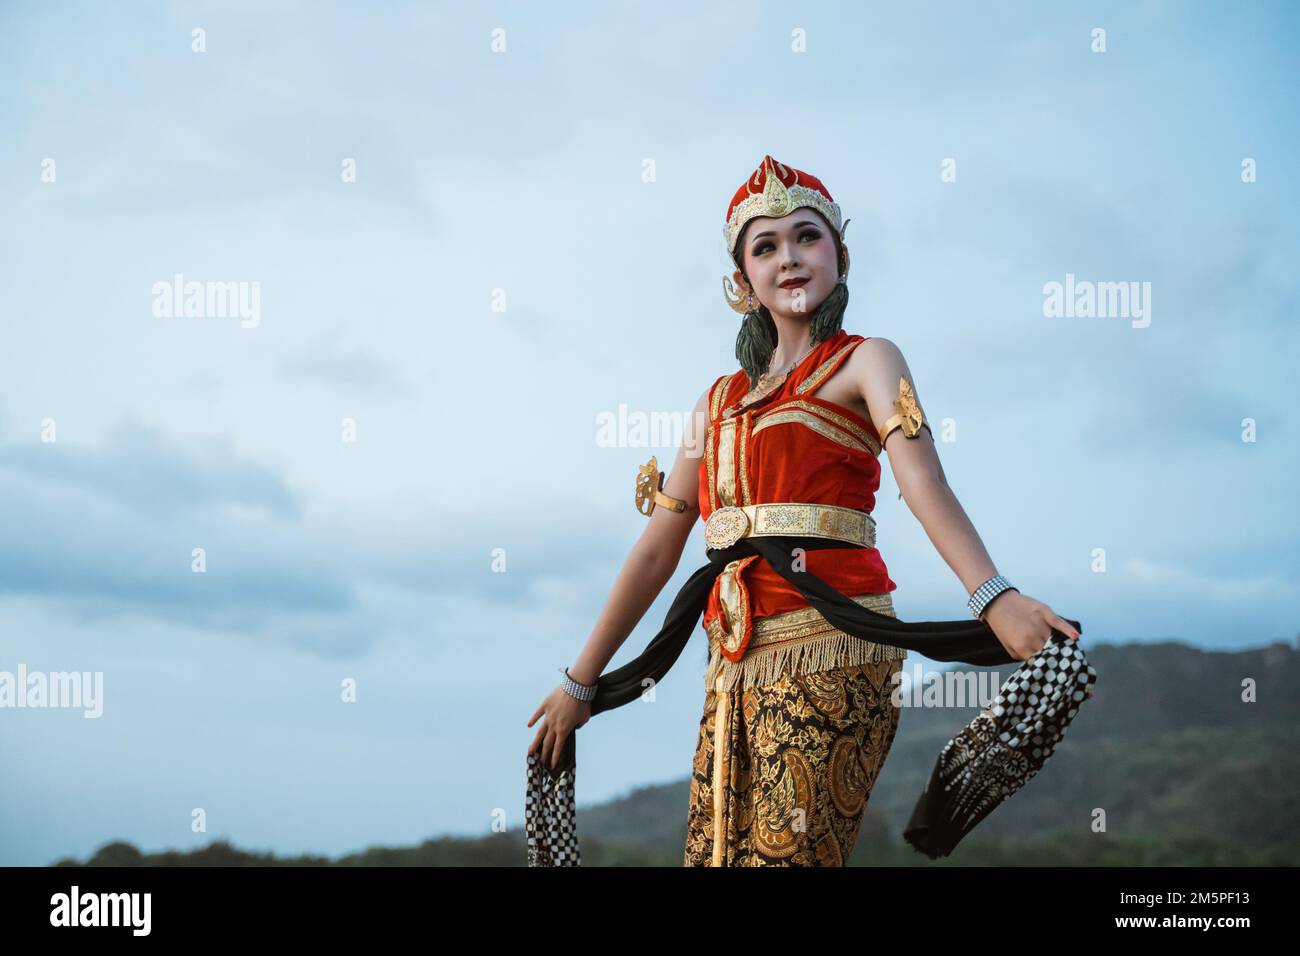 women presenting traditional Javanese dance movements Stock Photo